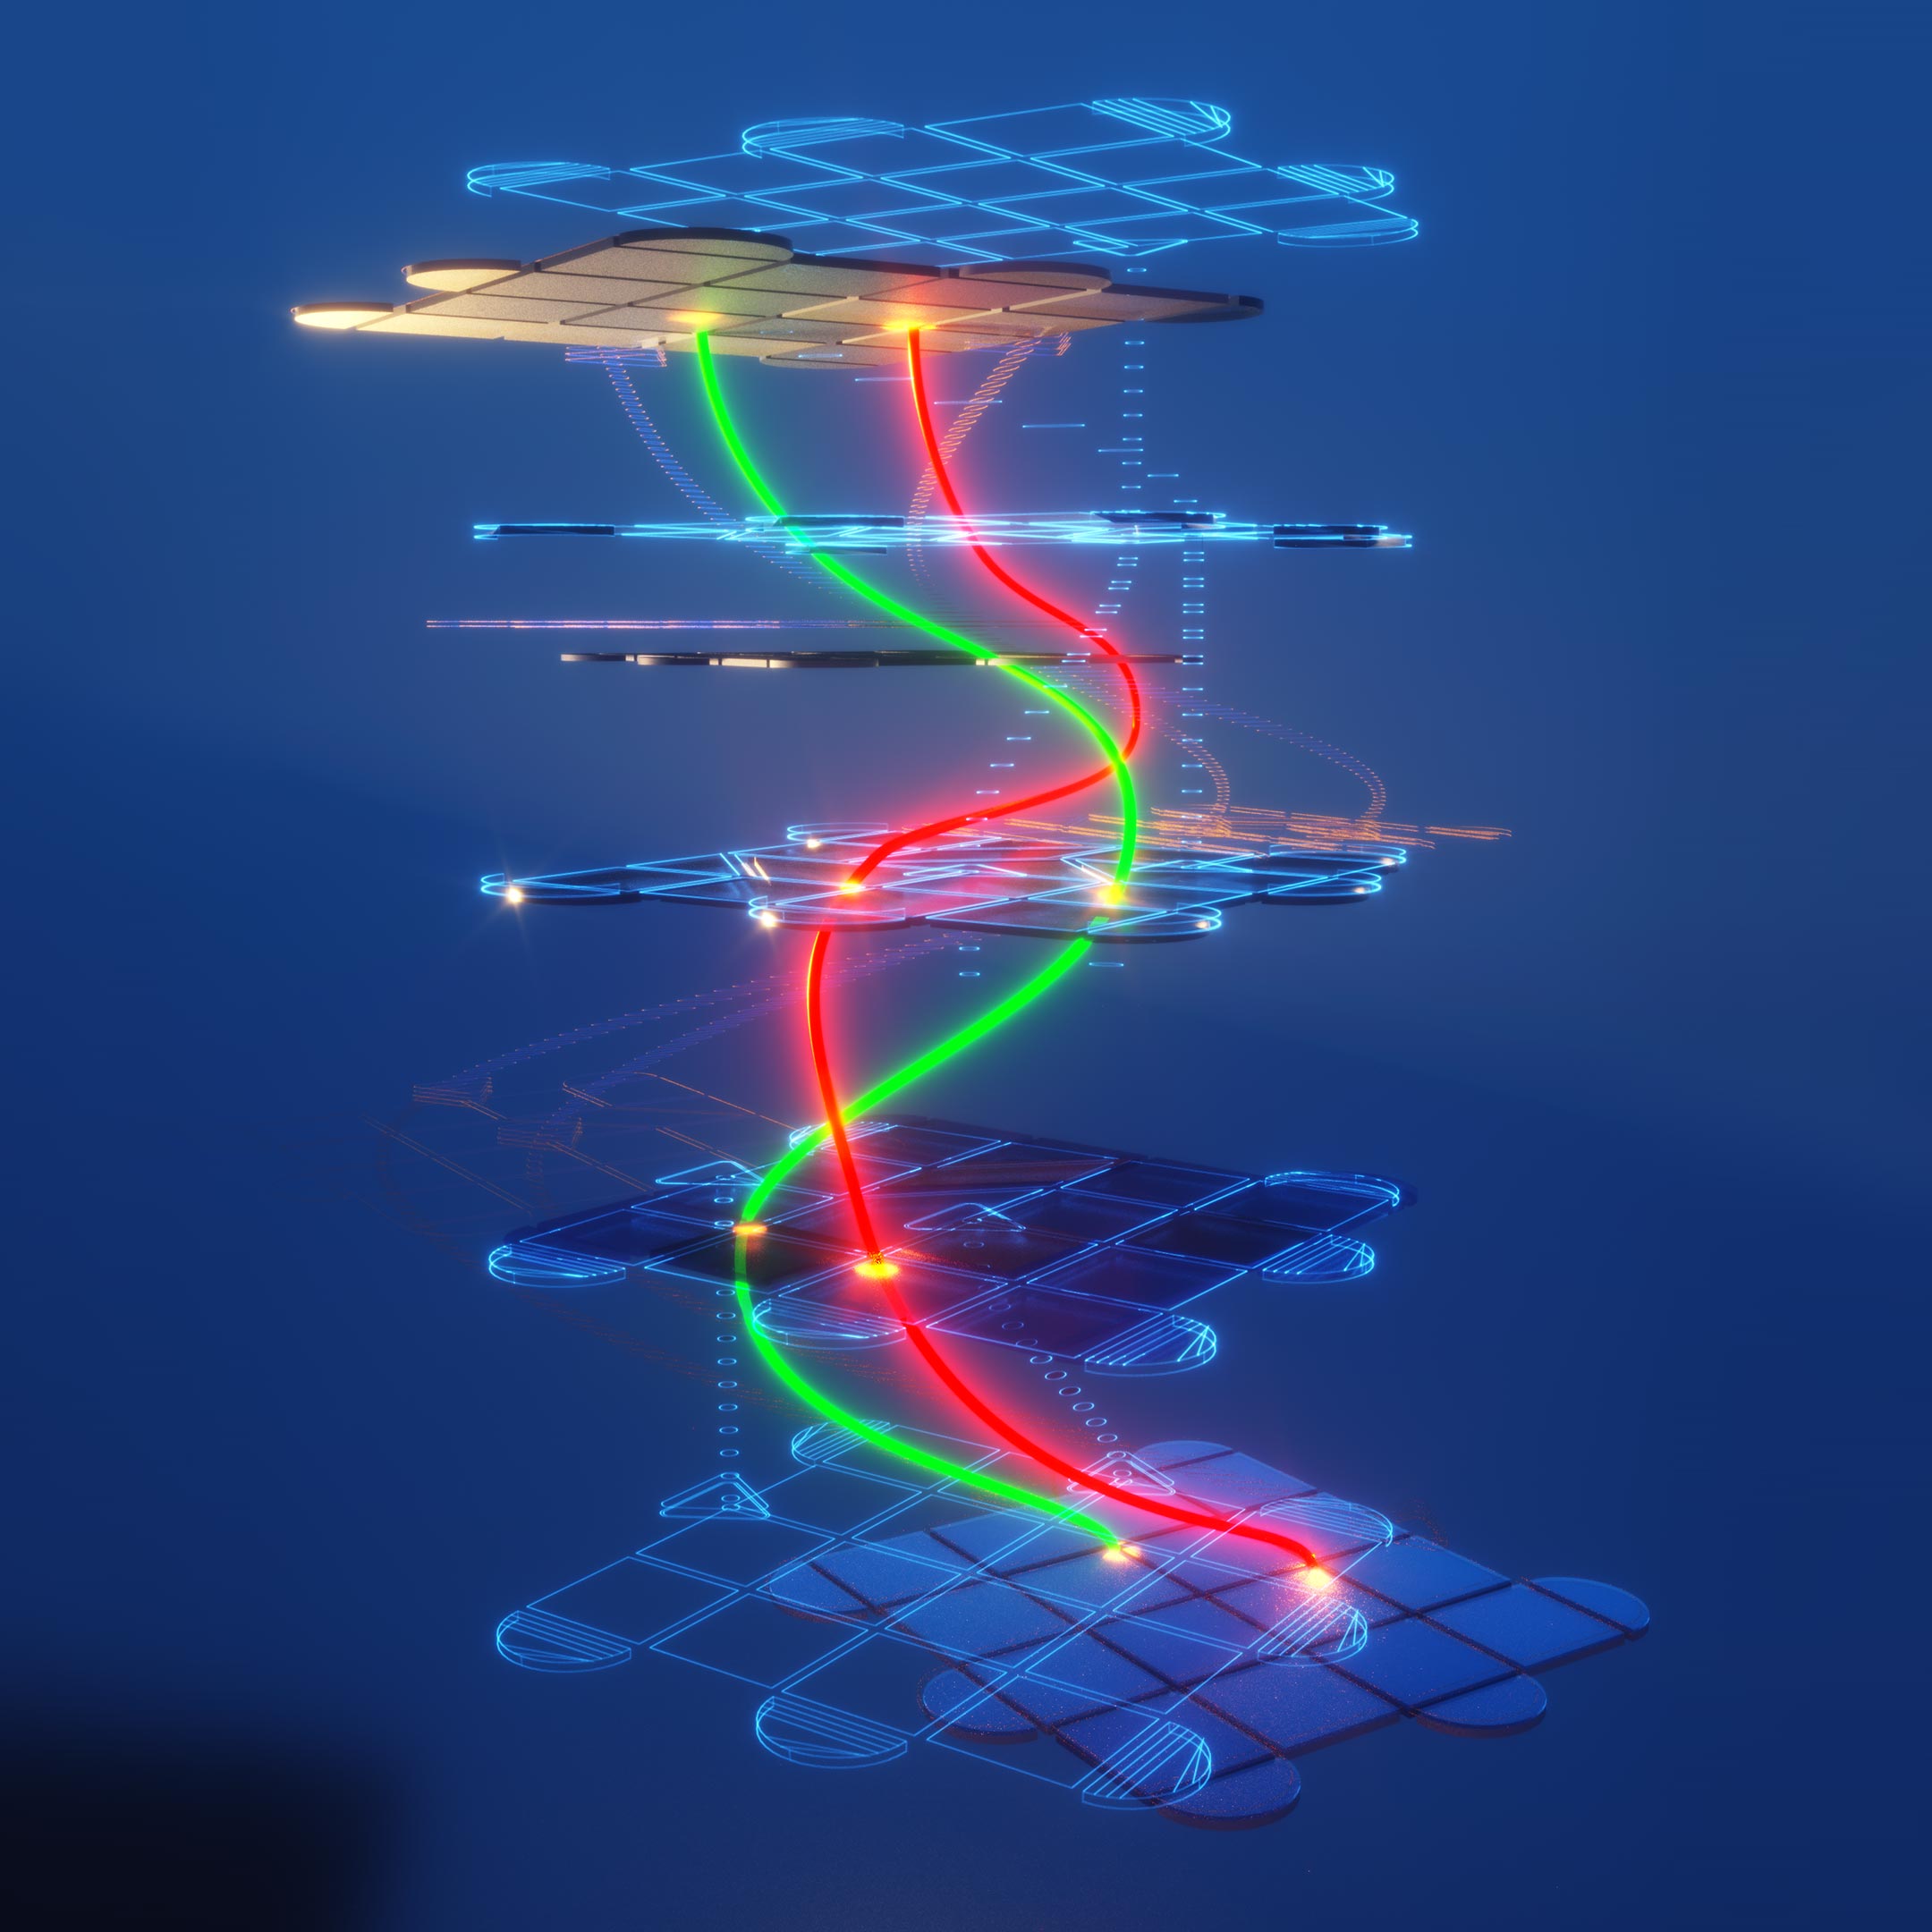 Google’s quantum AI braids – a breakthrough that could revolutionize quantum computing